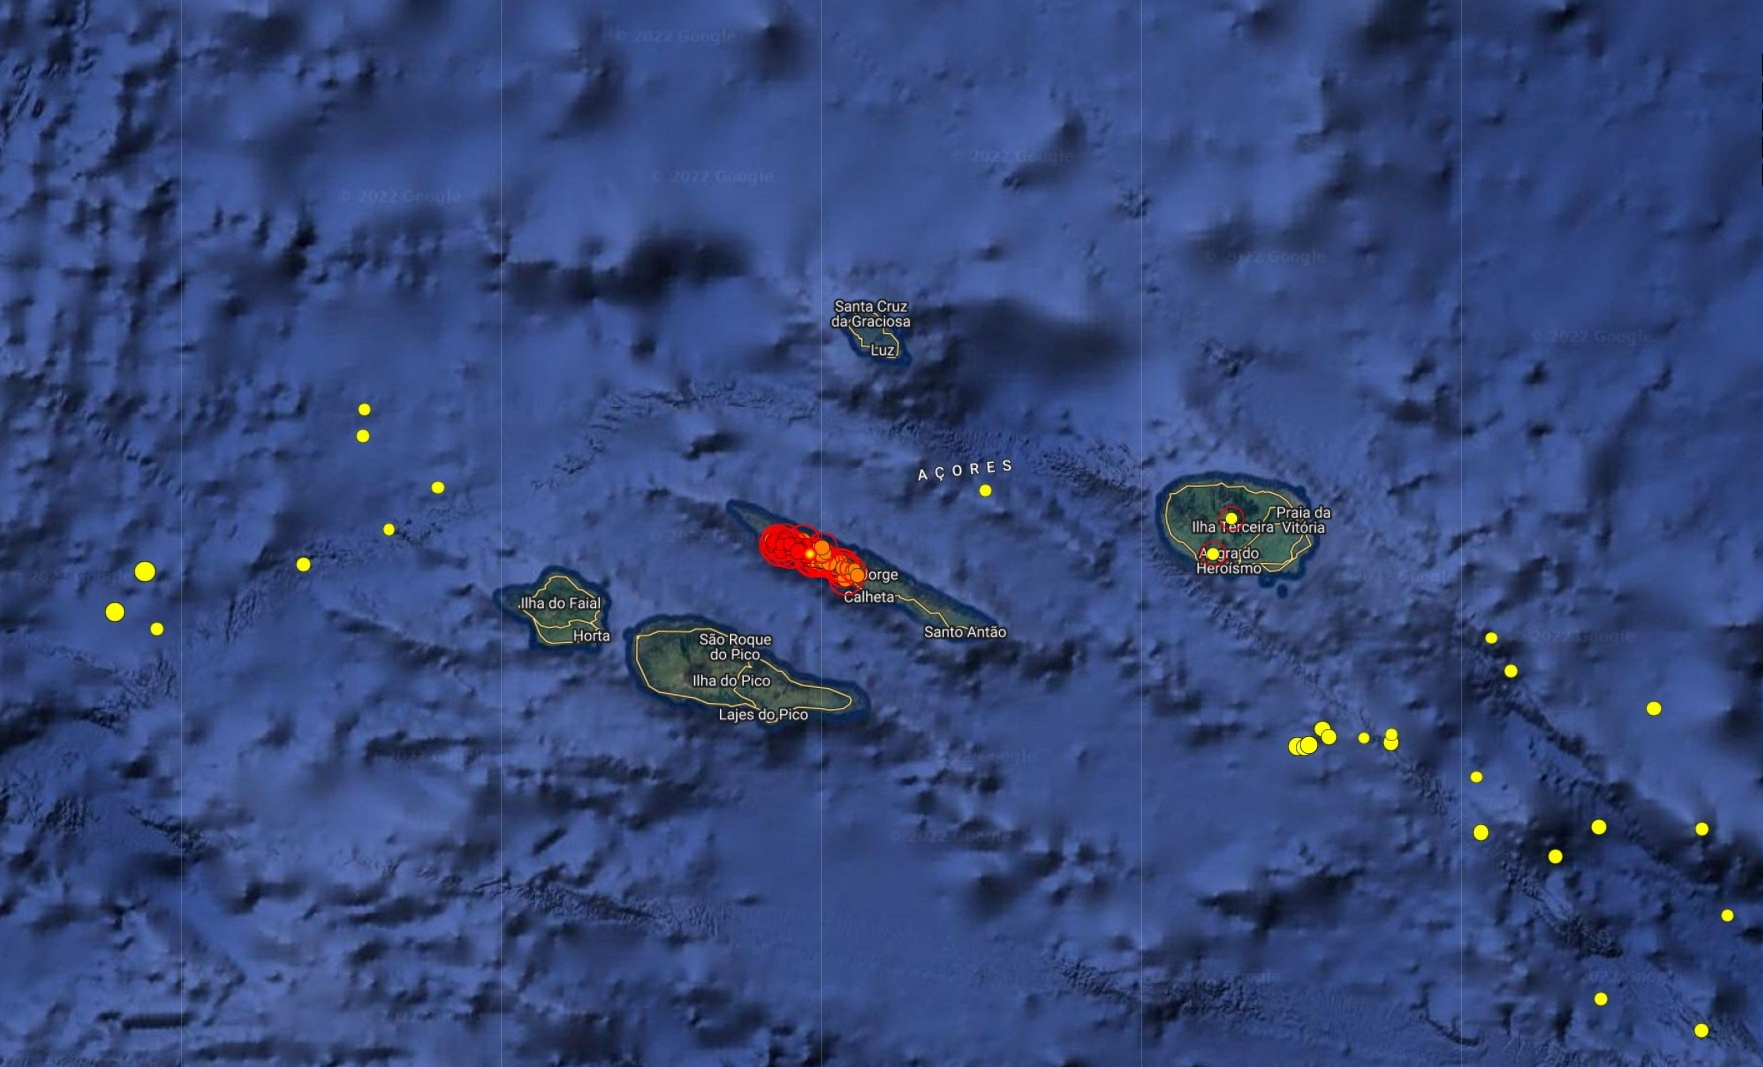 Satellite map showing seismic activity at Sao Jorge island